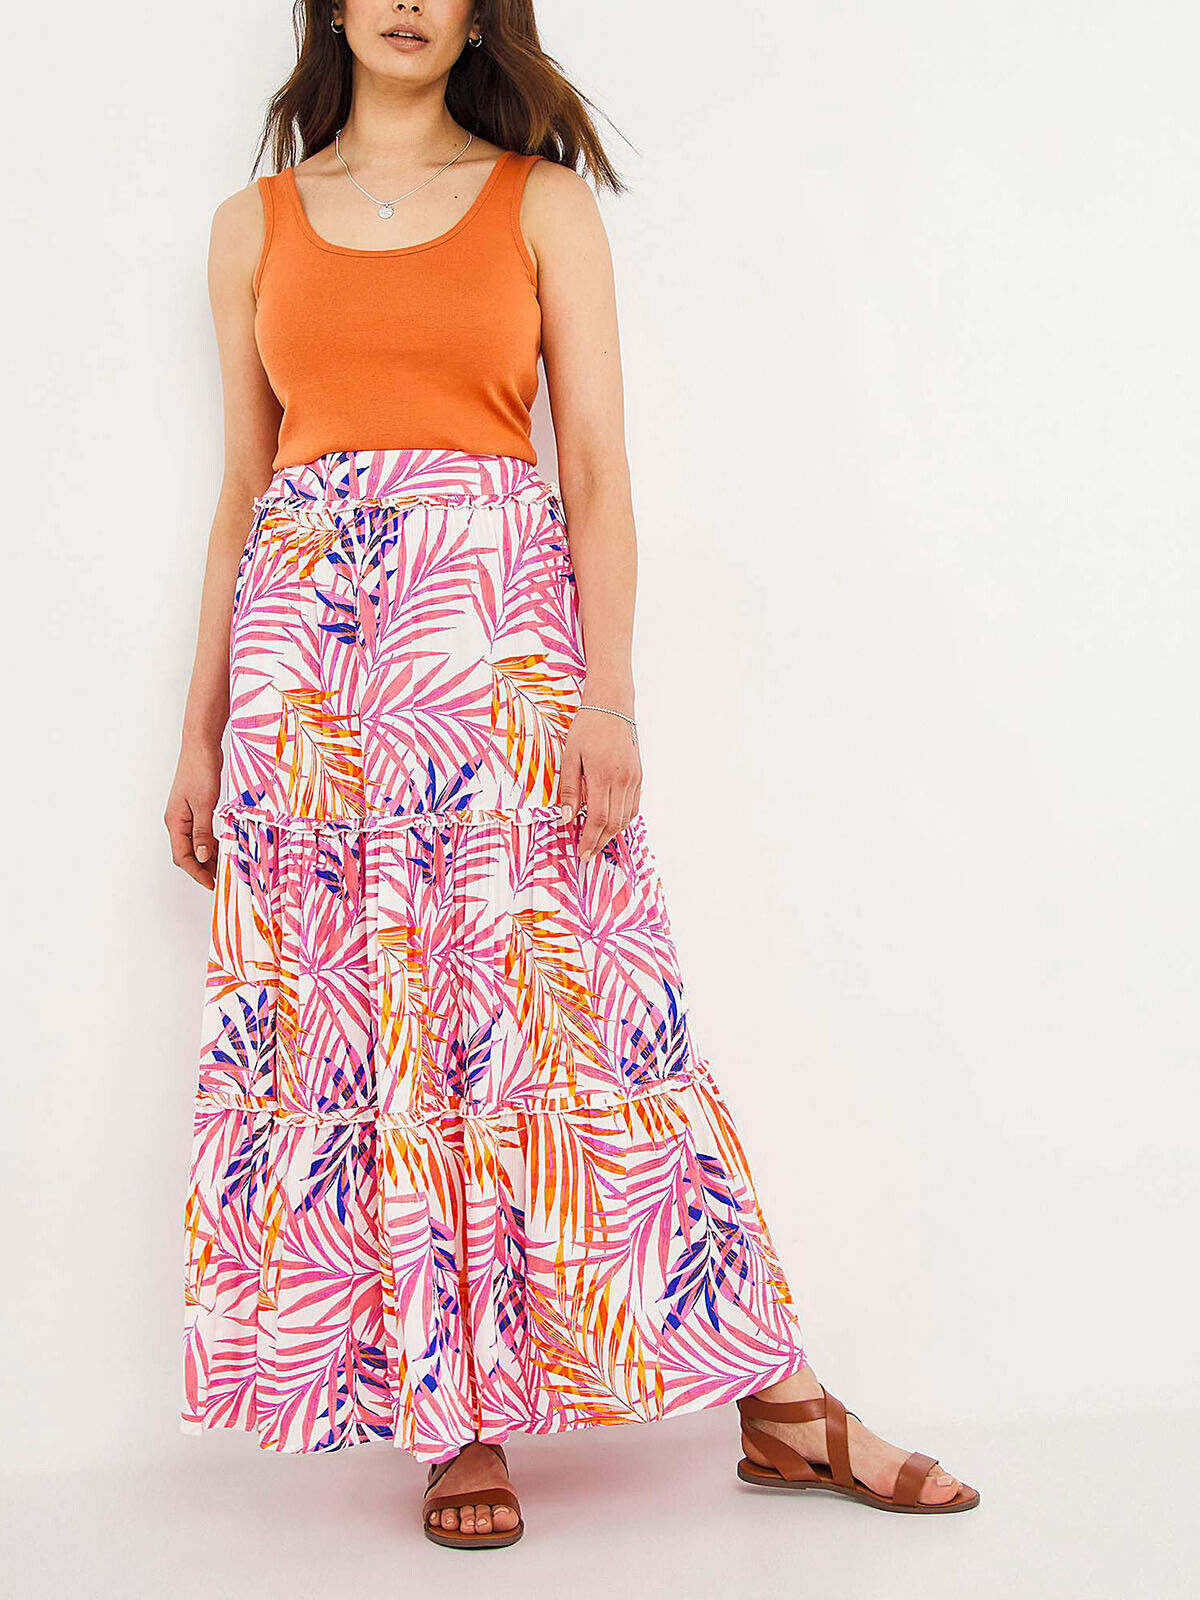 Julipa Pink Crinkle Palm Tree Skirt Sizes 16, 18, 20, 22, 28, 30 RRP £36